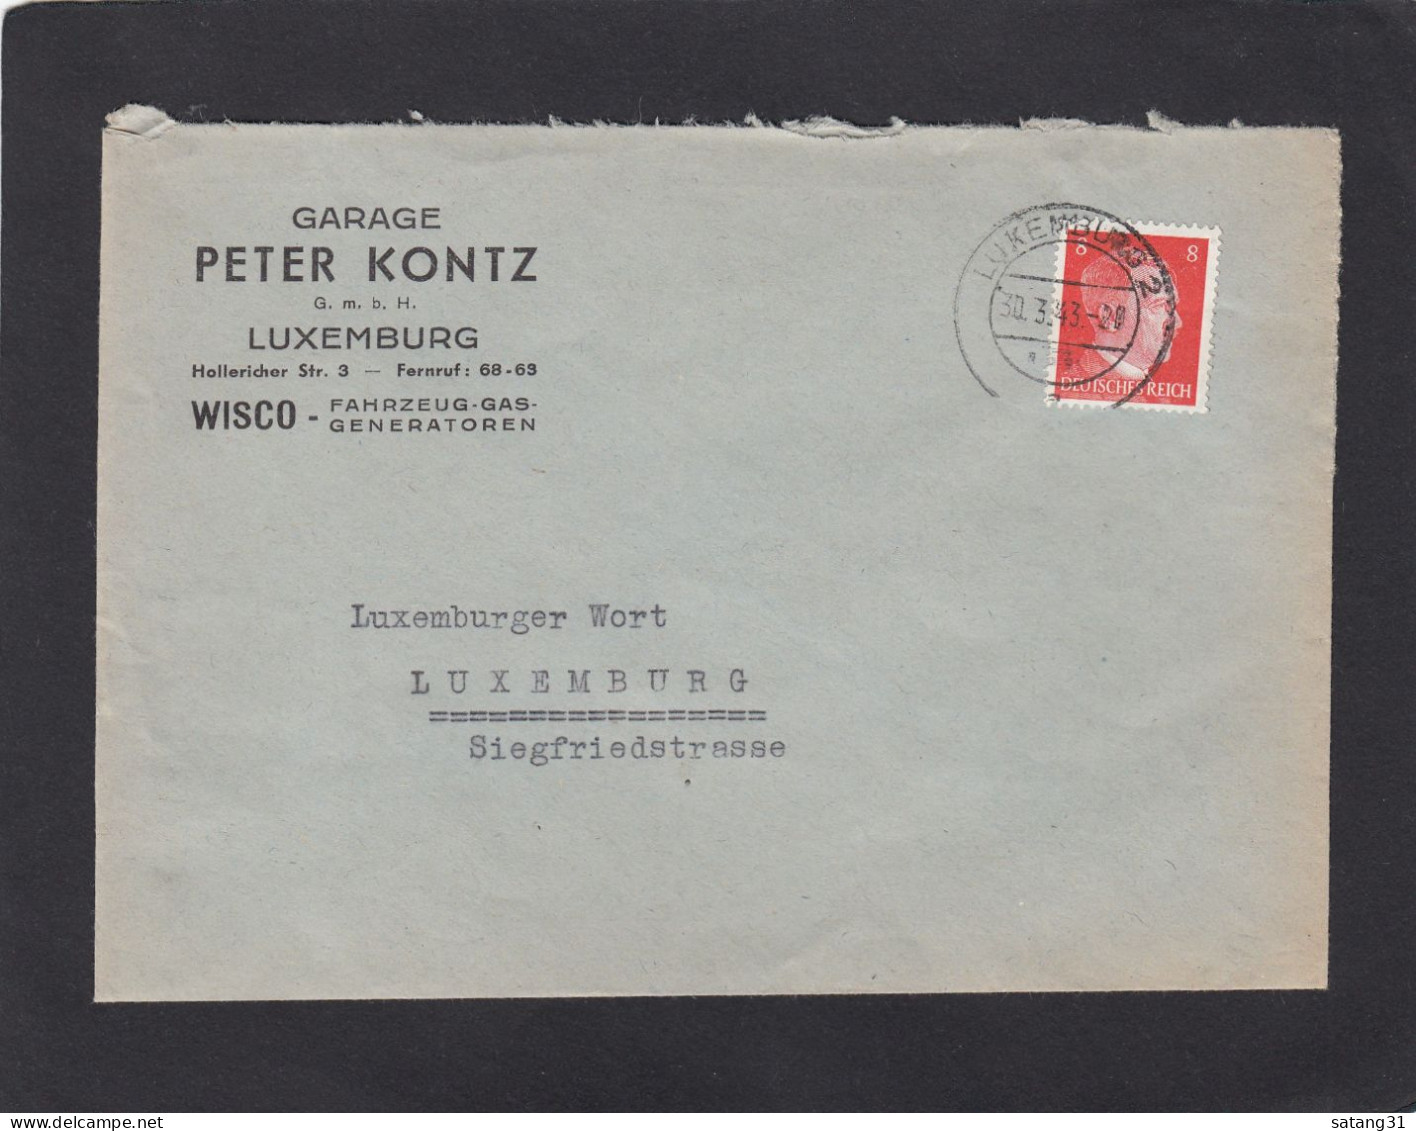 GARAGE PETER KONTZ G.M.B.H., LUXEMBURG. WISCO - FAHRZEUG-GAS-GENERATOREN. - 1940-1944 Duitse Bezetting